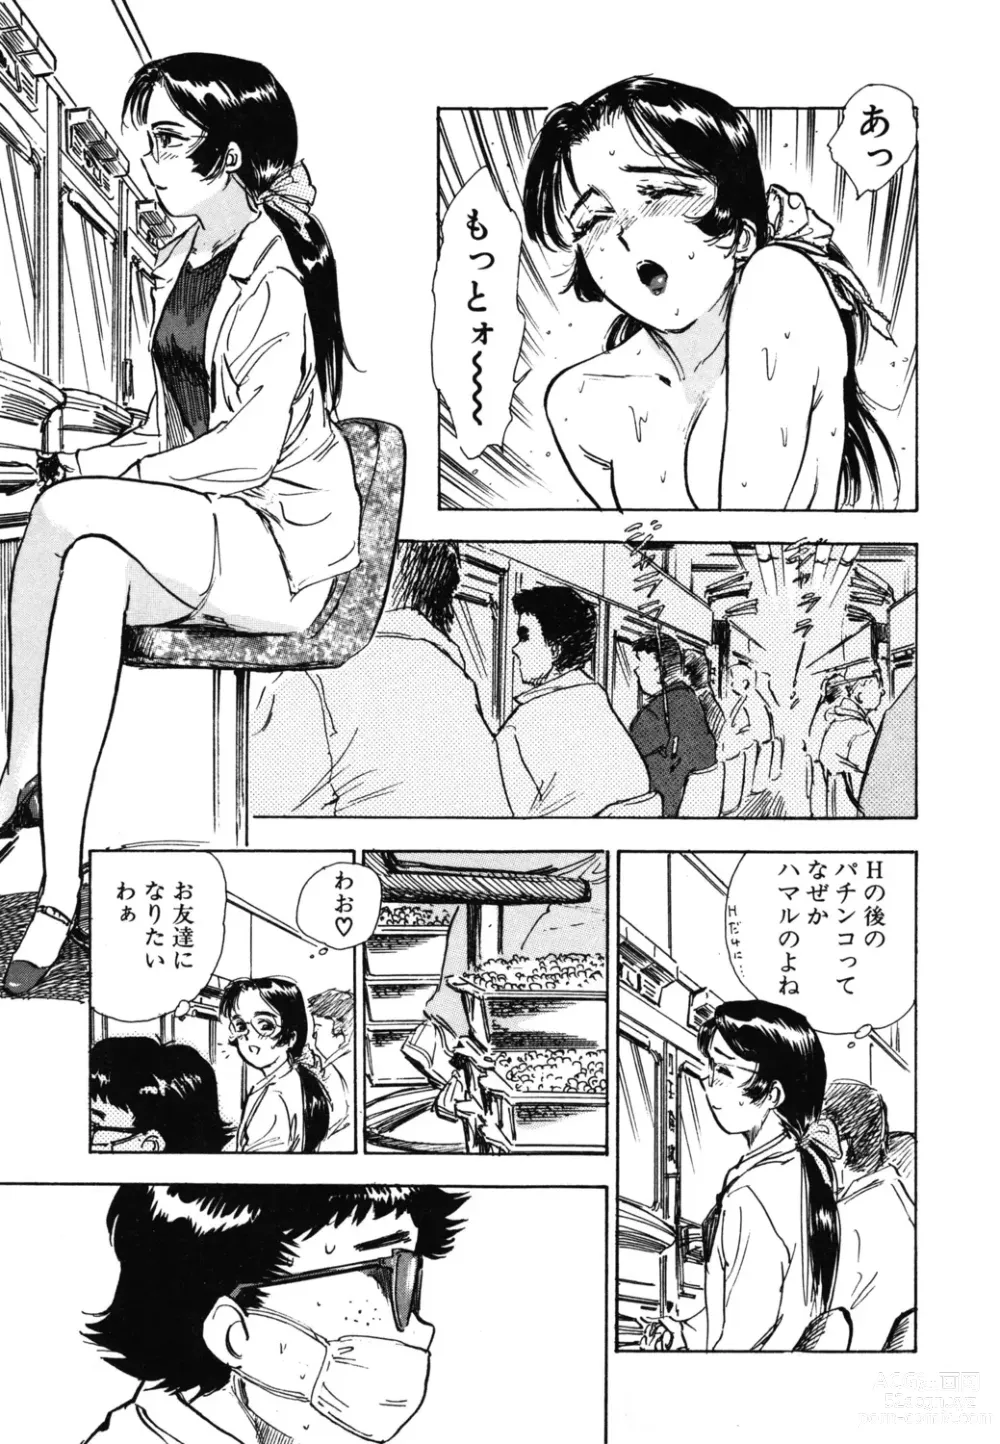 Page 7 of manga Abunai Reiko Sensei 1